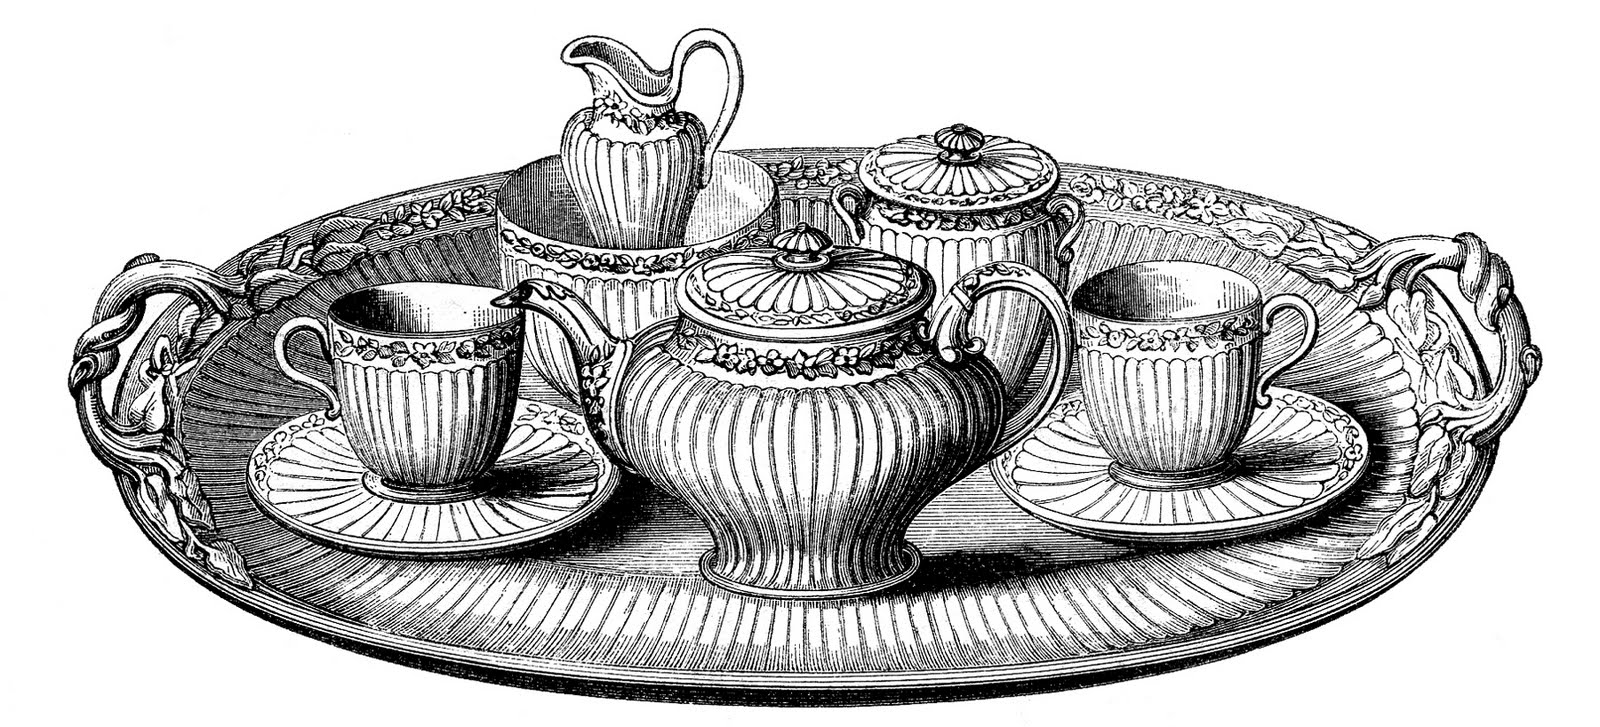 Vintage Clip Art   Tea Set With Platter   The Graphics Fairy